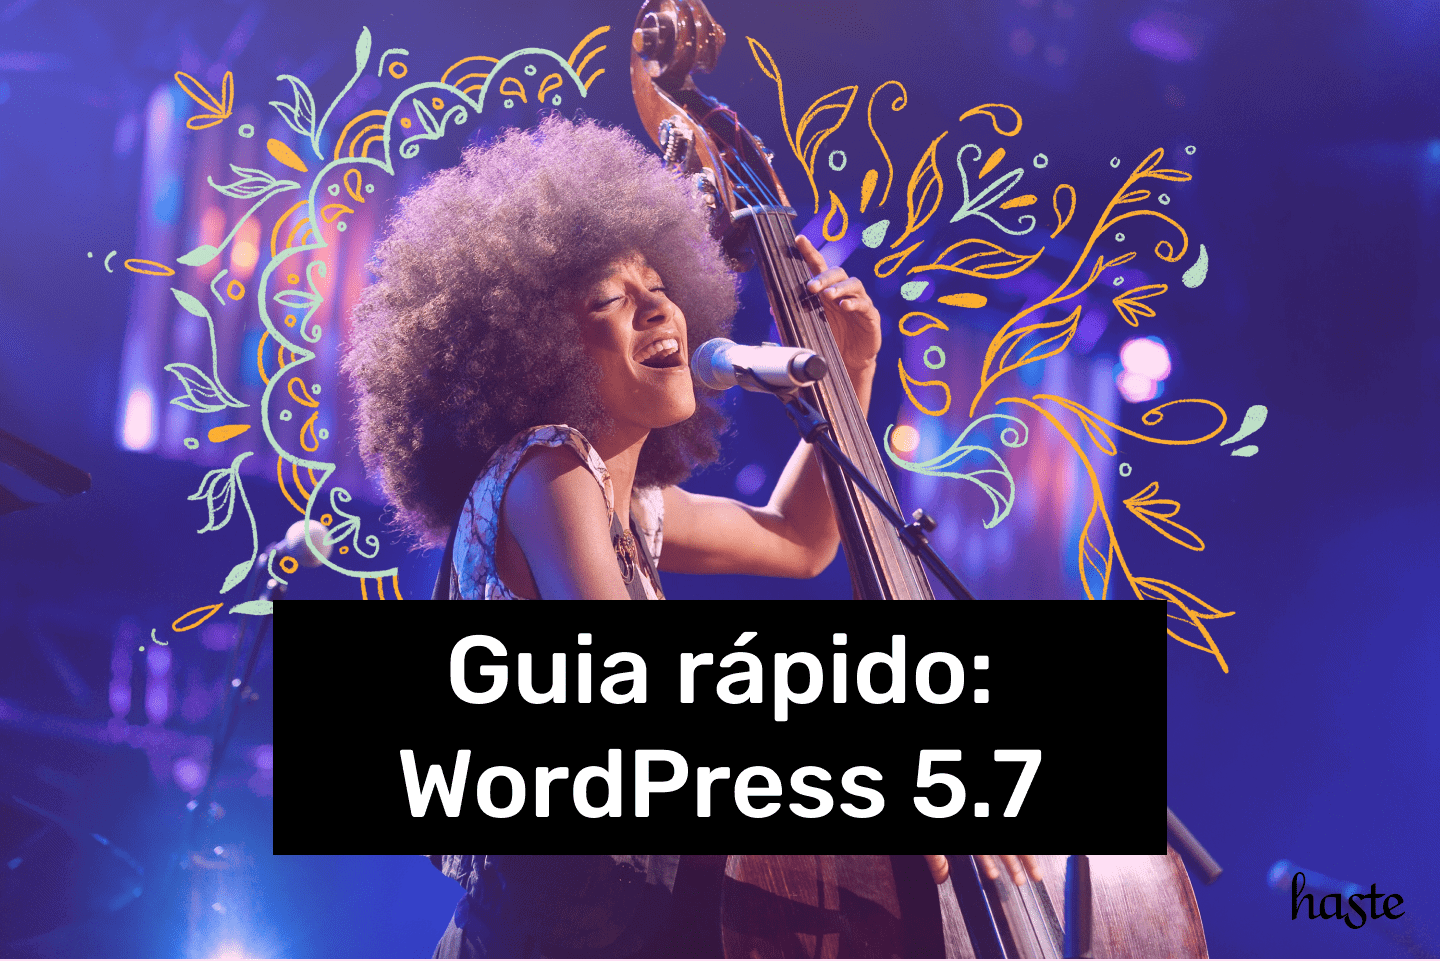 Guia rápido: WordPress 5.7. Imagem ilustrativa da cantora Esperanza Spalding.